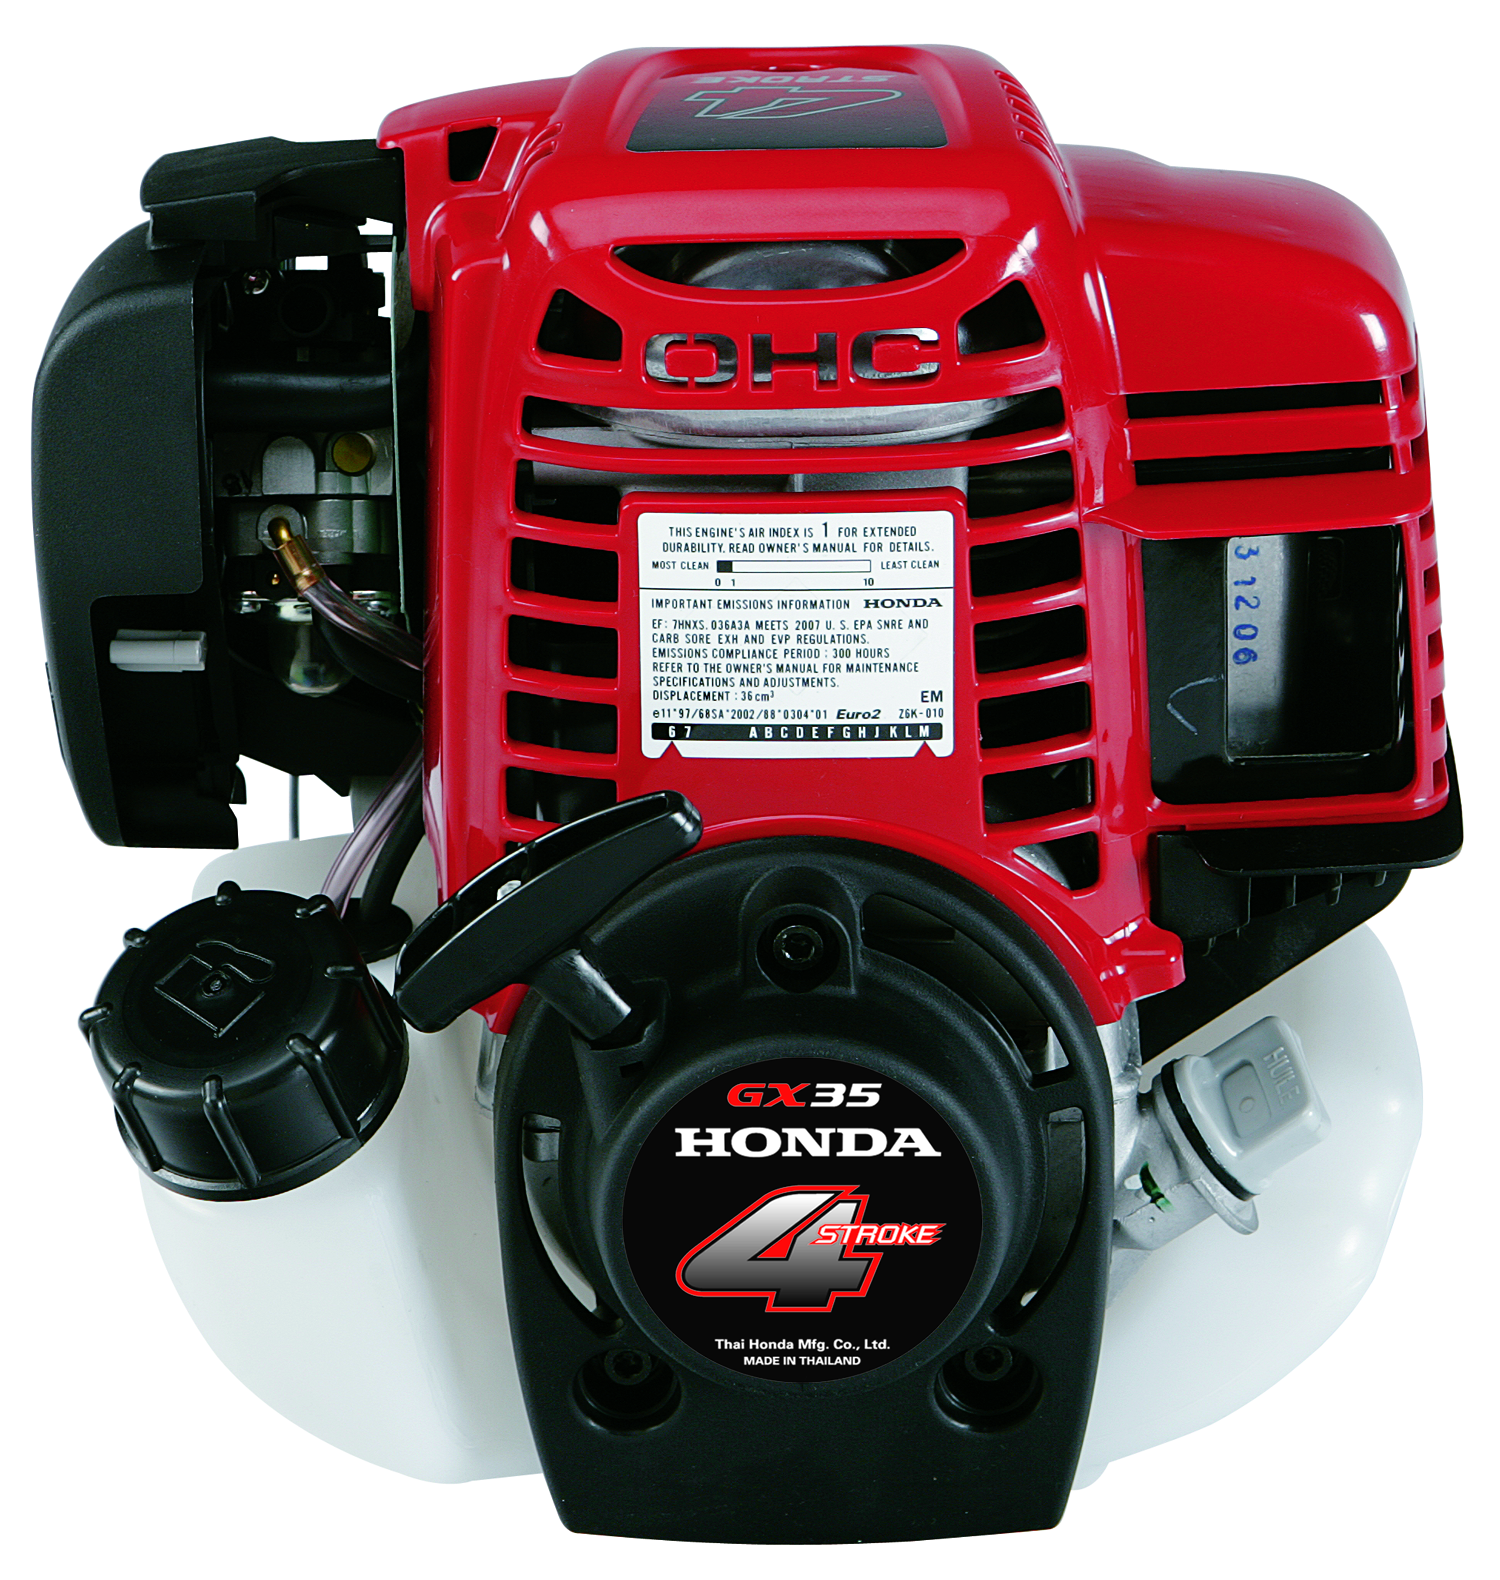 Honda Small Engine: Model GX35NTT3 Parts and Repair Help